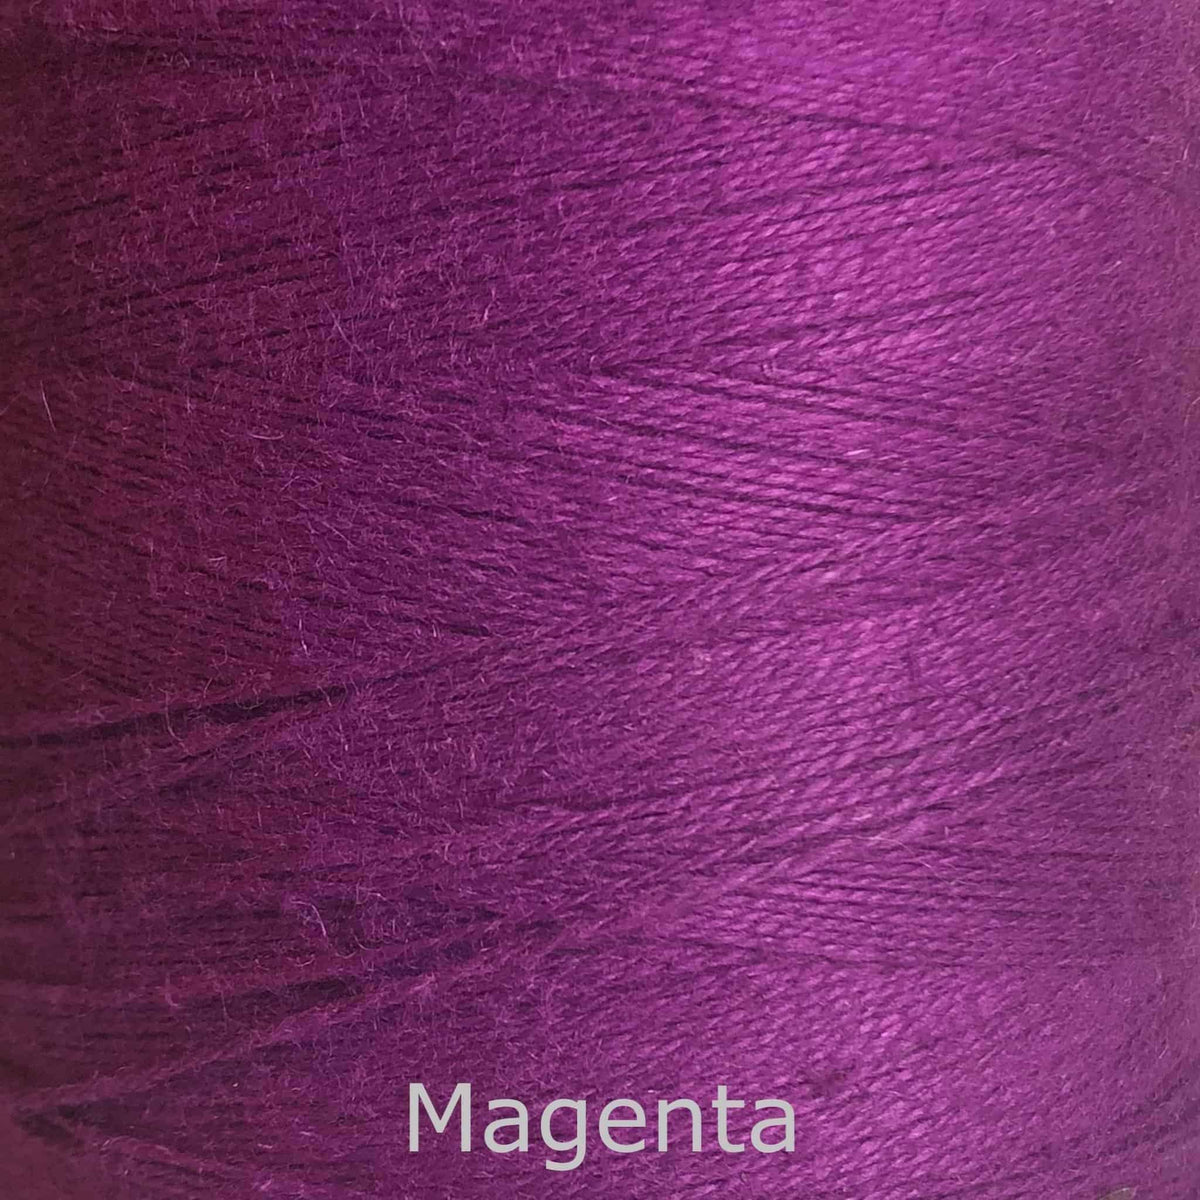 16/2 cotton weaving yarn magenta 